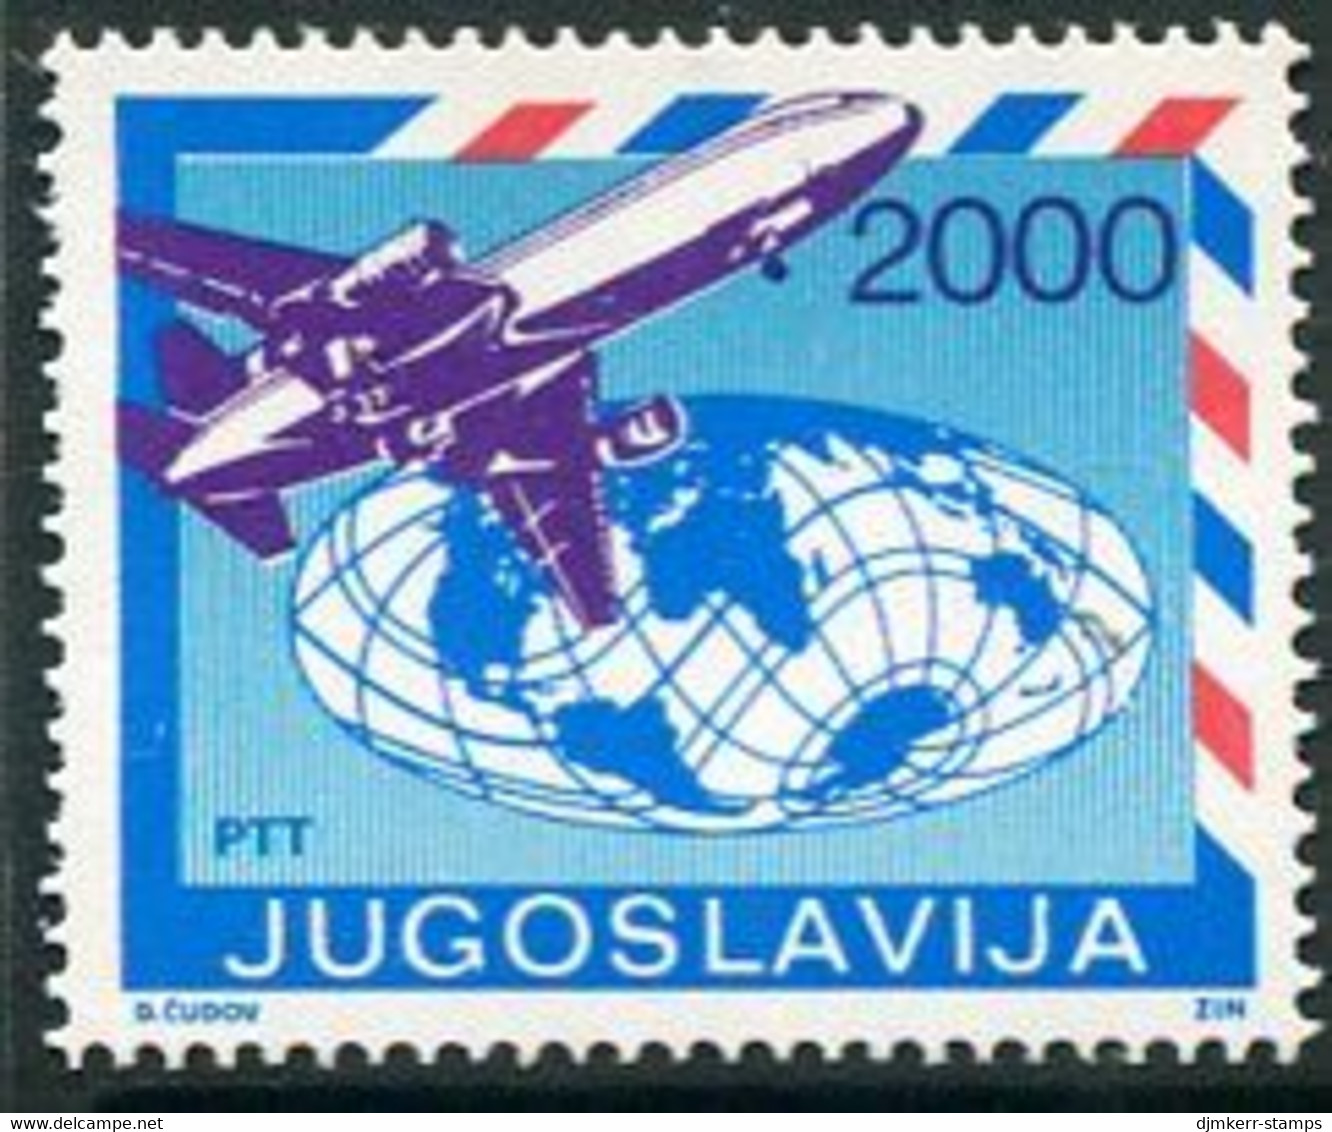 YUGOSLAVIA 1988 Airmail Definitive 2000 D. MNH / **.  Michel 2296 - Ungebraucht